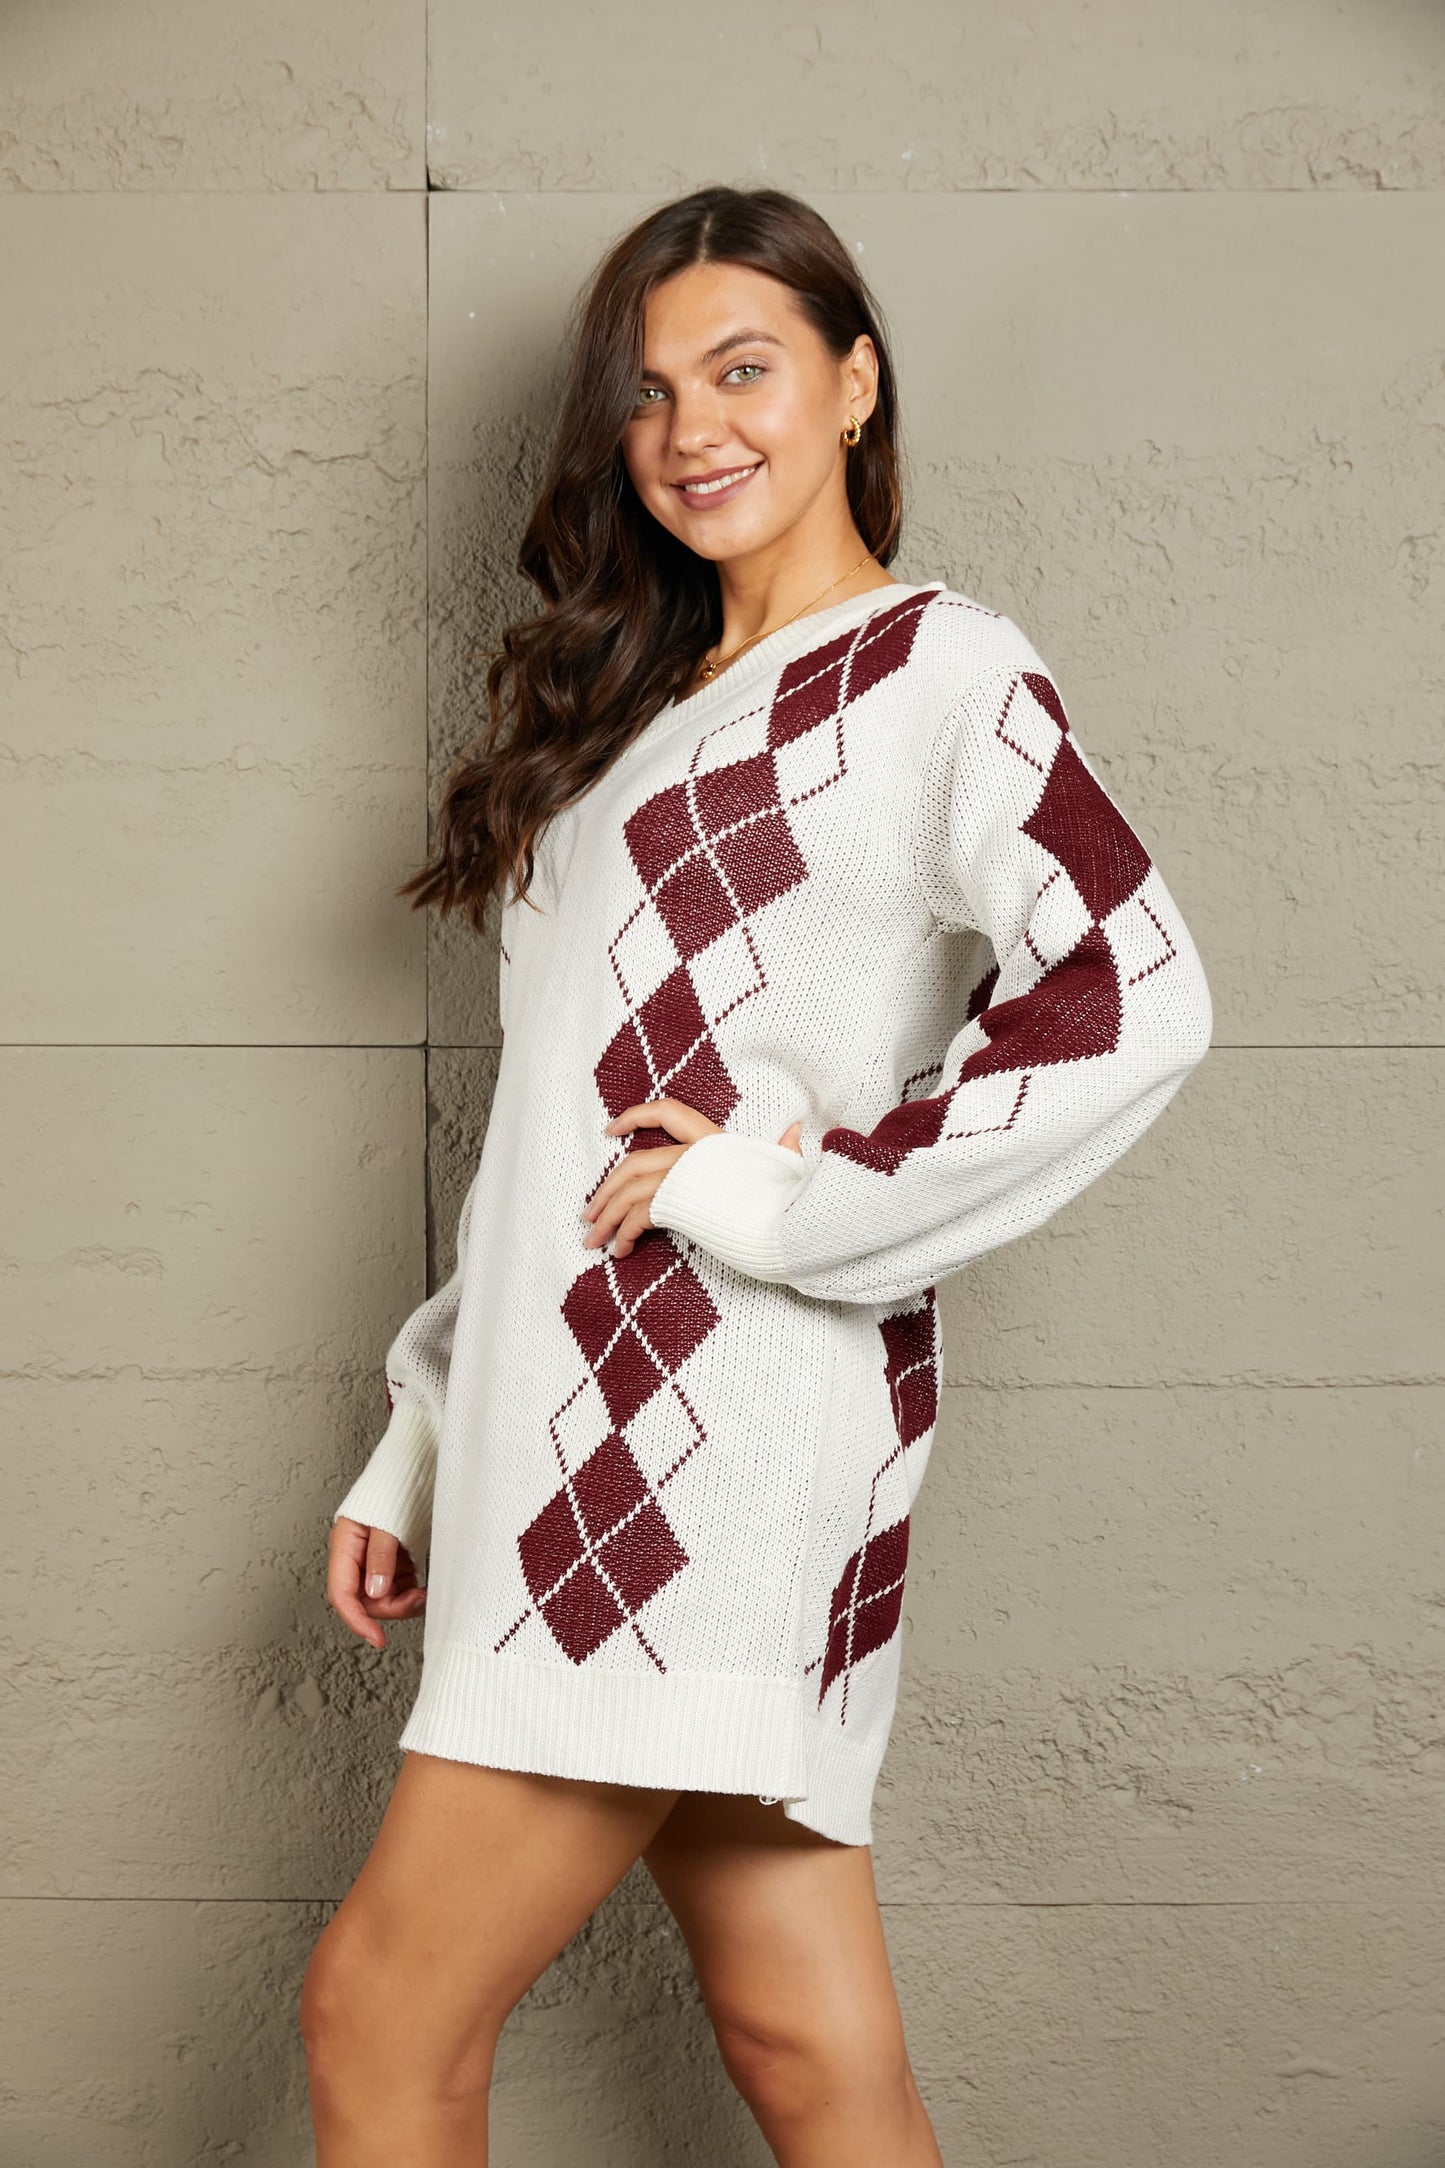 Woven Right Argyle V-Neck Ribbed Trim Sweater Dress